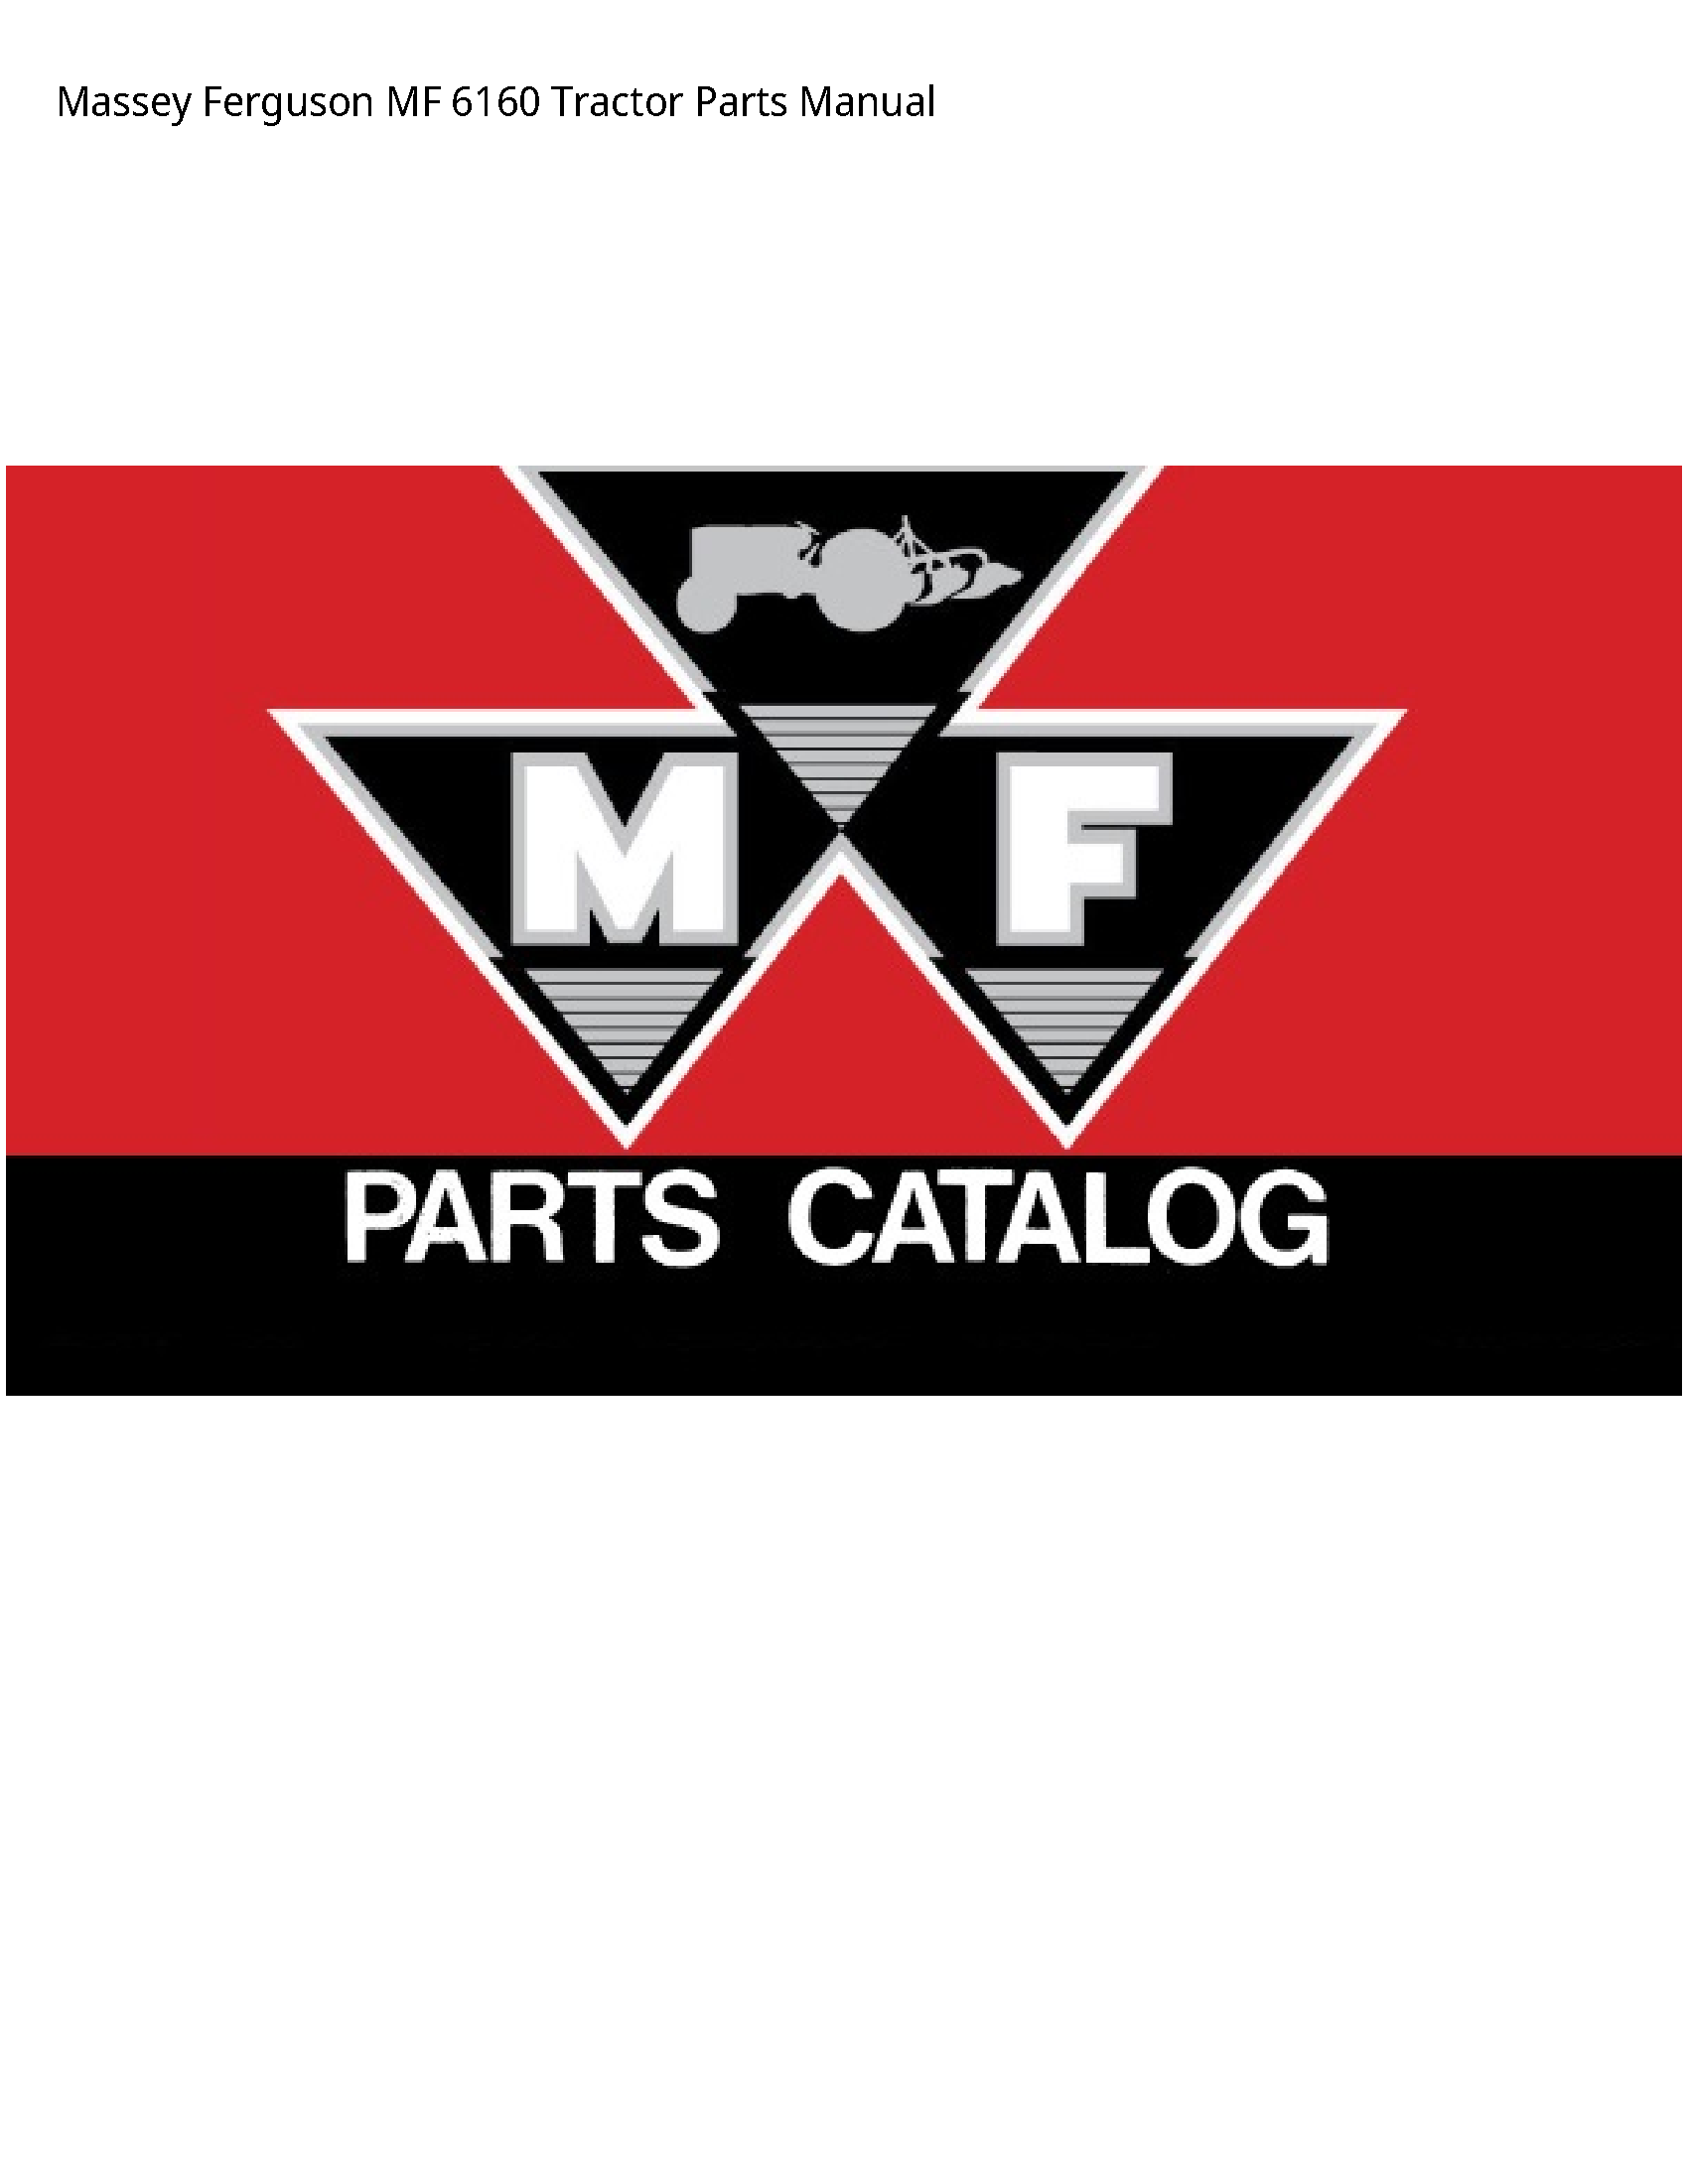 Massey Ferguson 6160 MF Tractor Parts manual